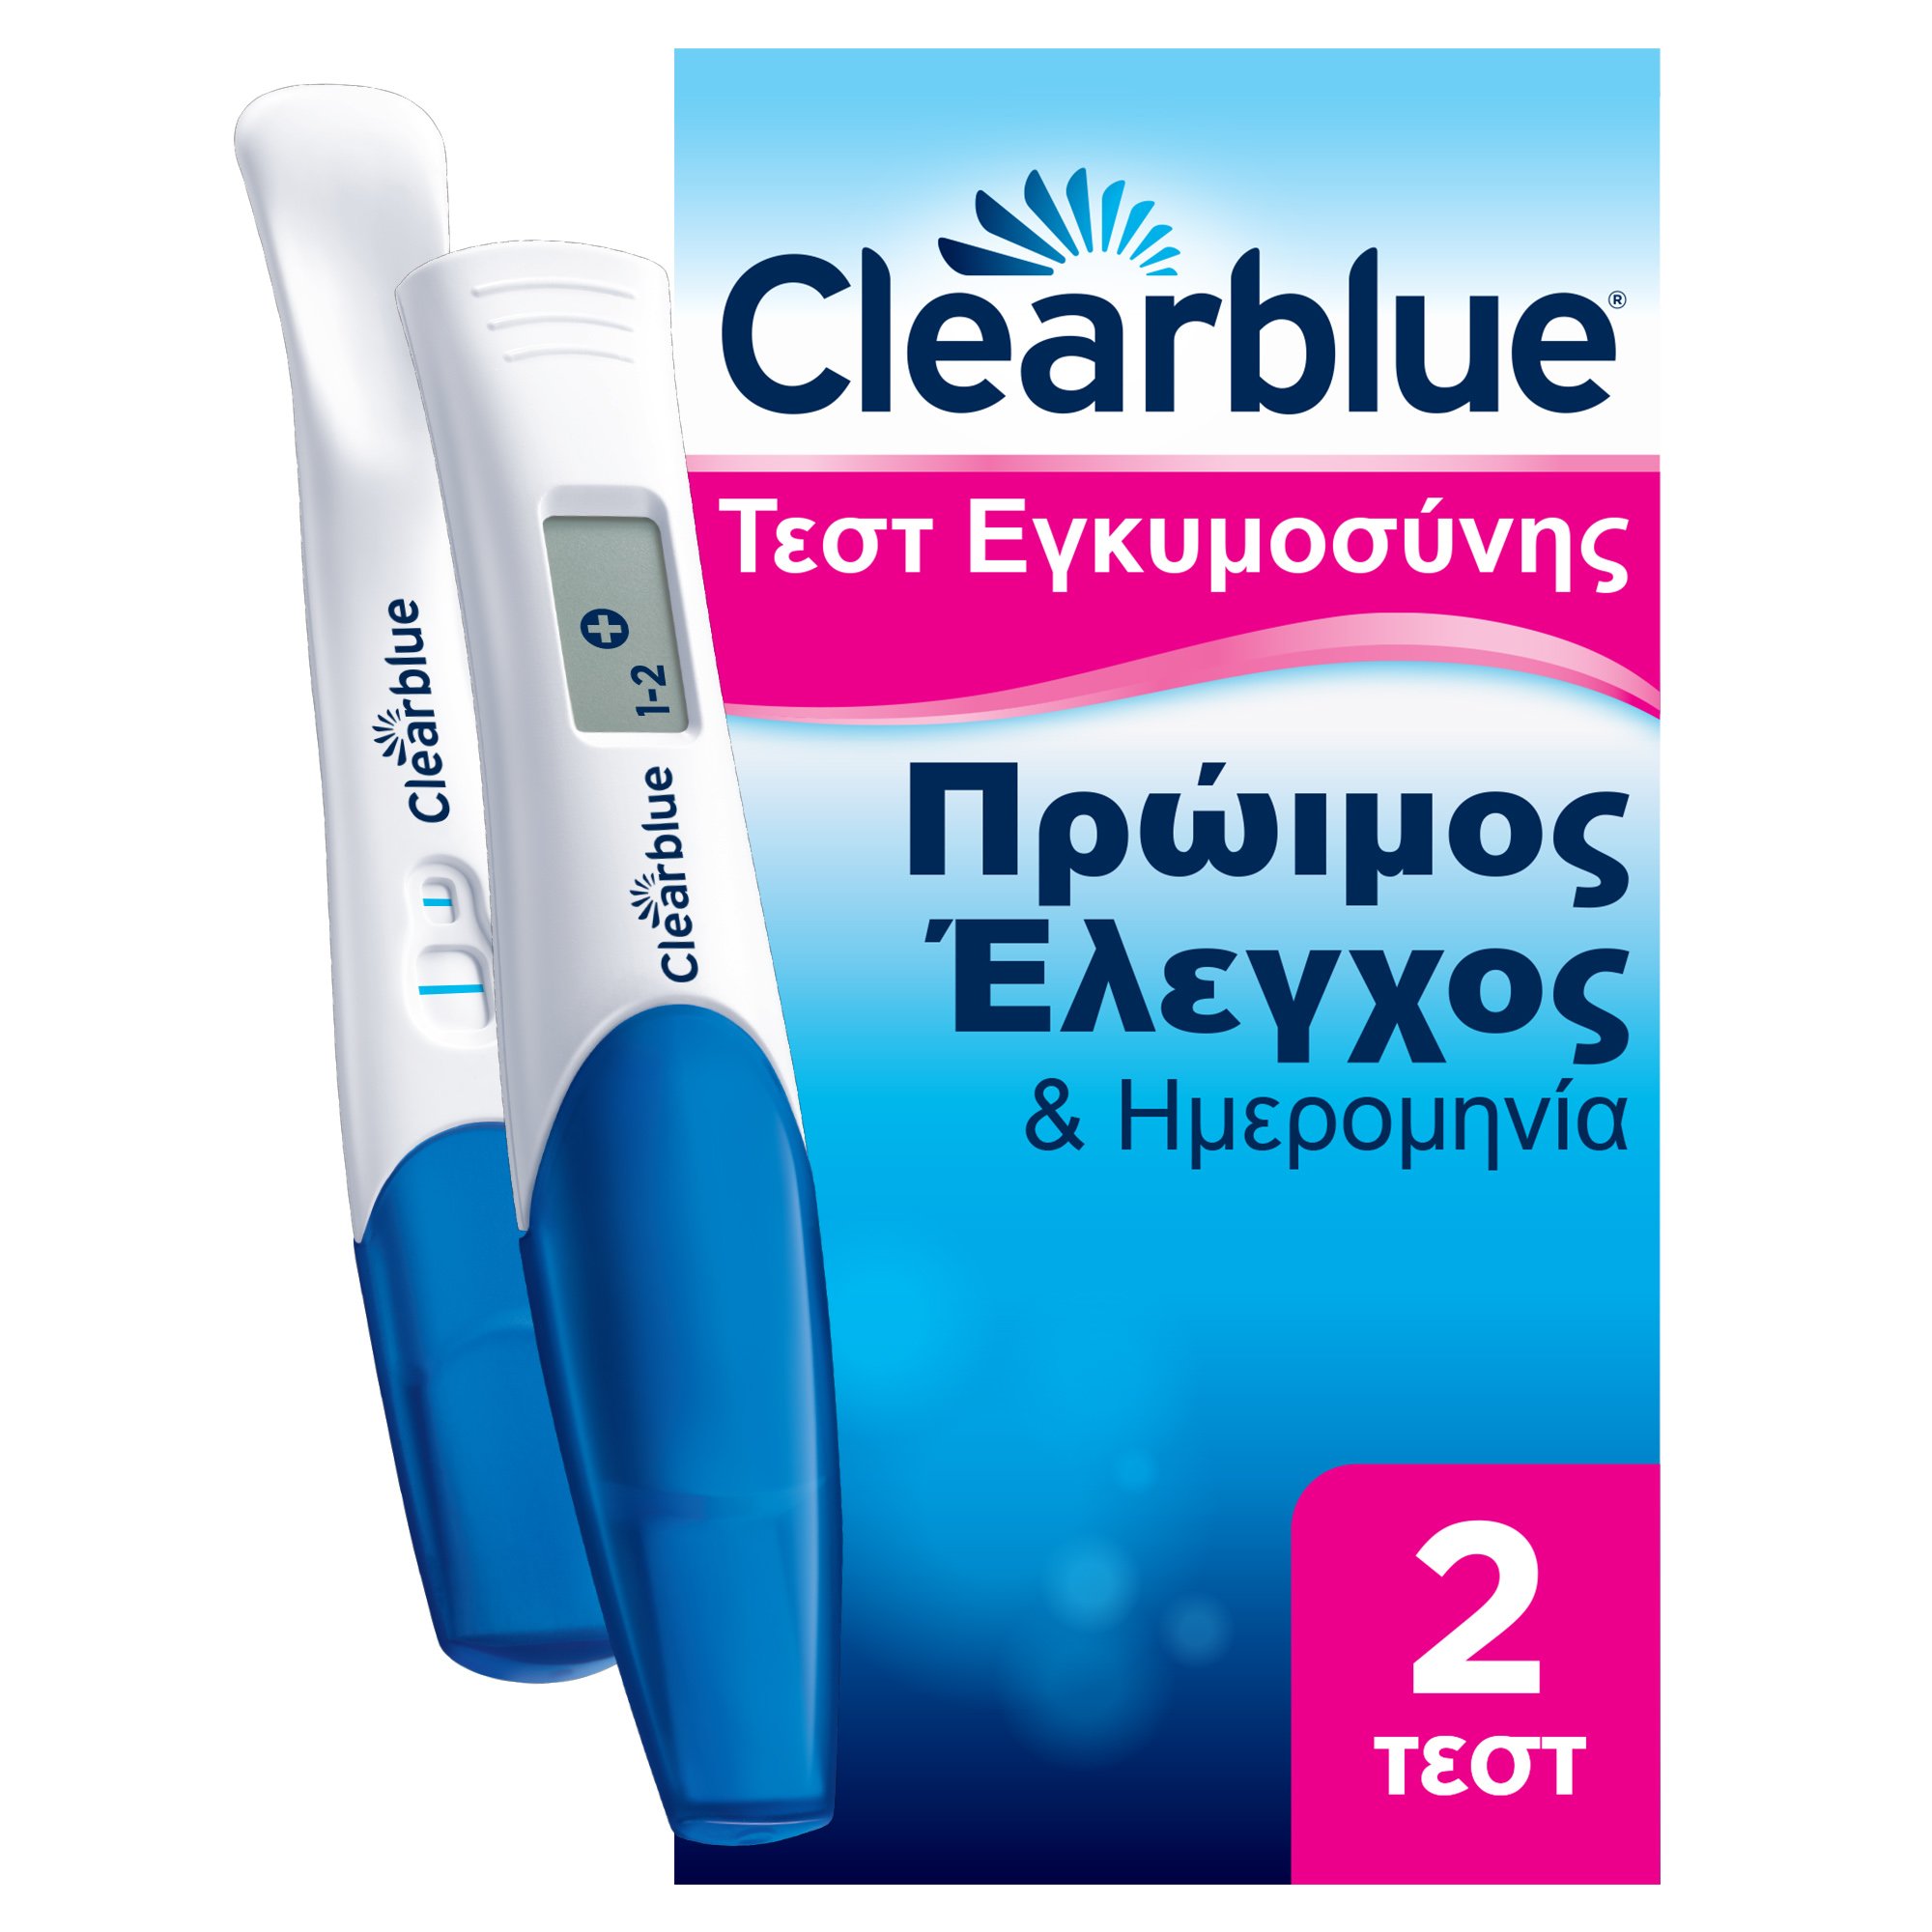 Clearblue Clearblue Combo Pack Συνδυασμένη Συσκευασία Πρώιμος Έλεγχος & Ημερομηνία Τεστ Εγκυμοσύνης 2 Τεμάχια